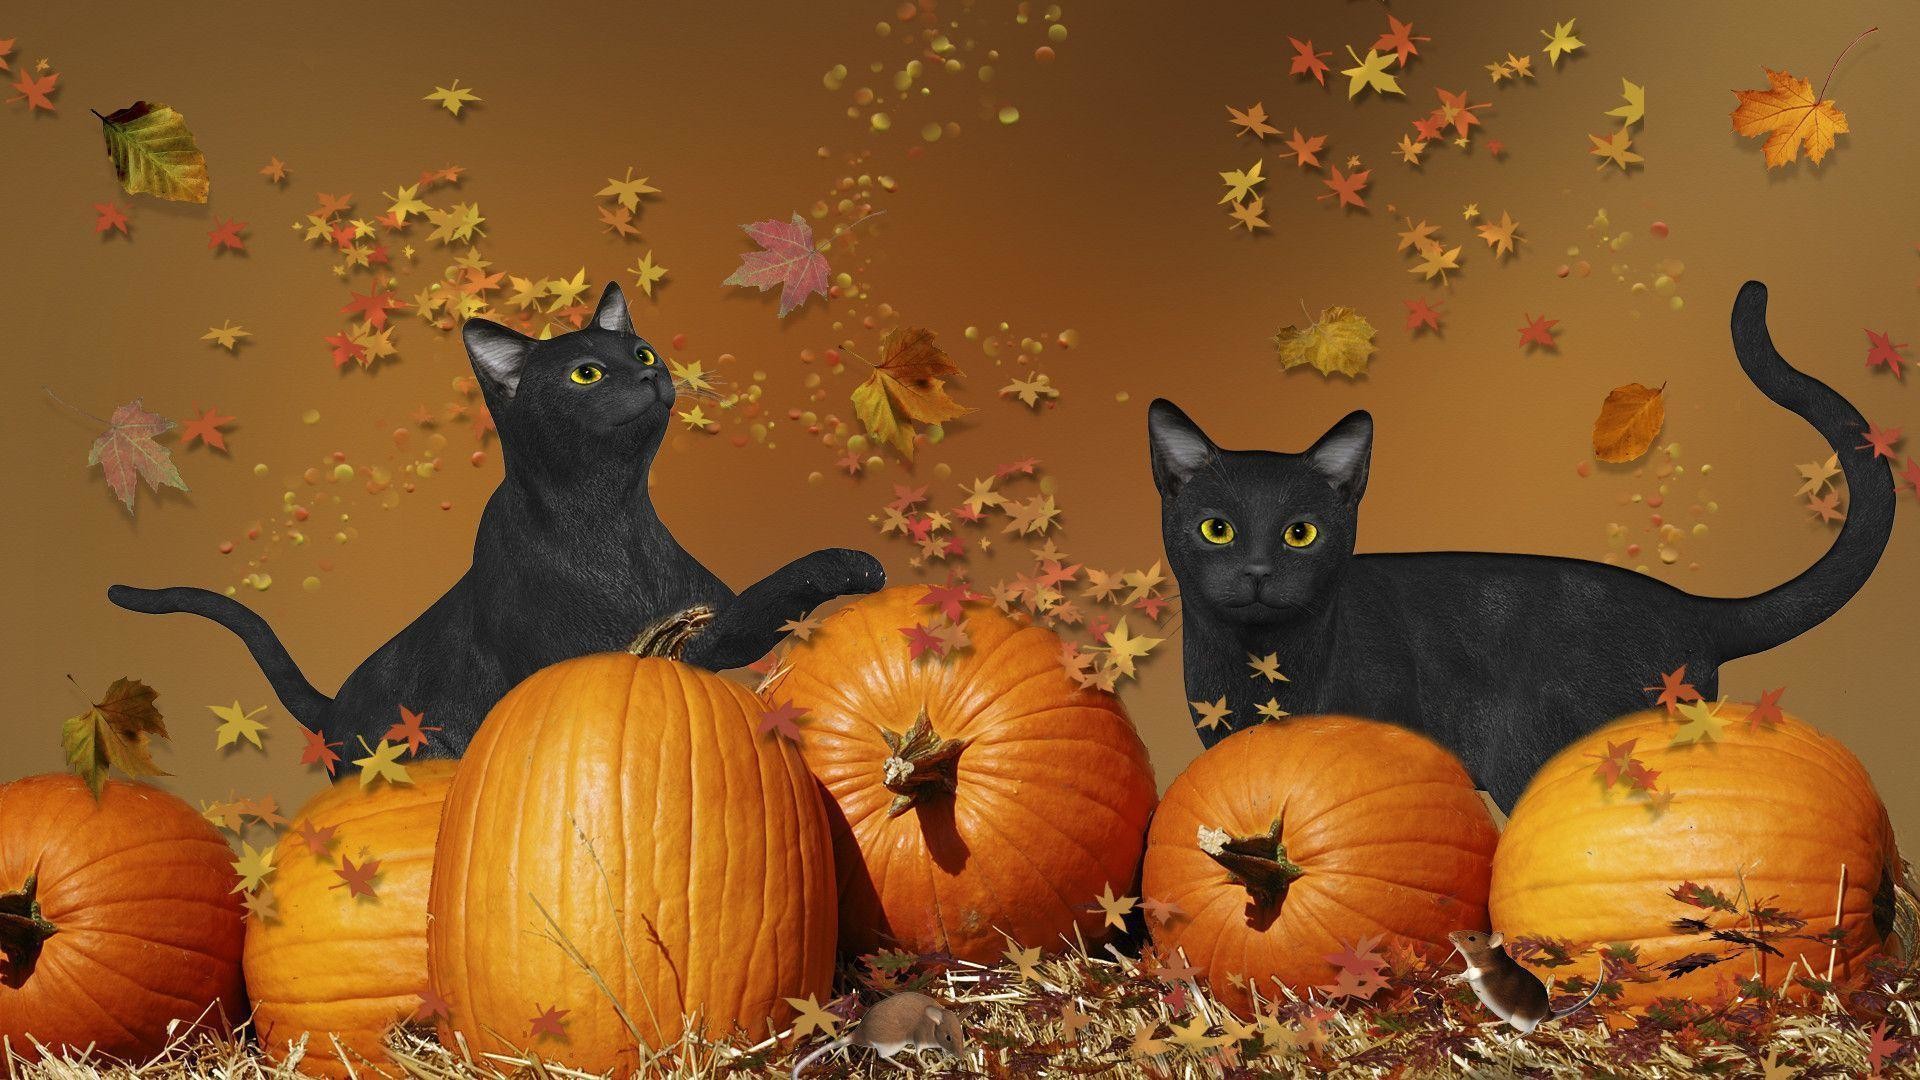 1920x1080 Wallpapers For > Cute Cat Halloween Wallpaper